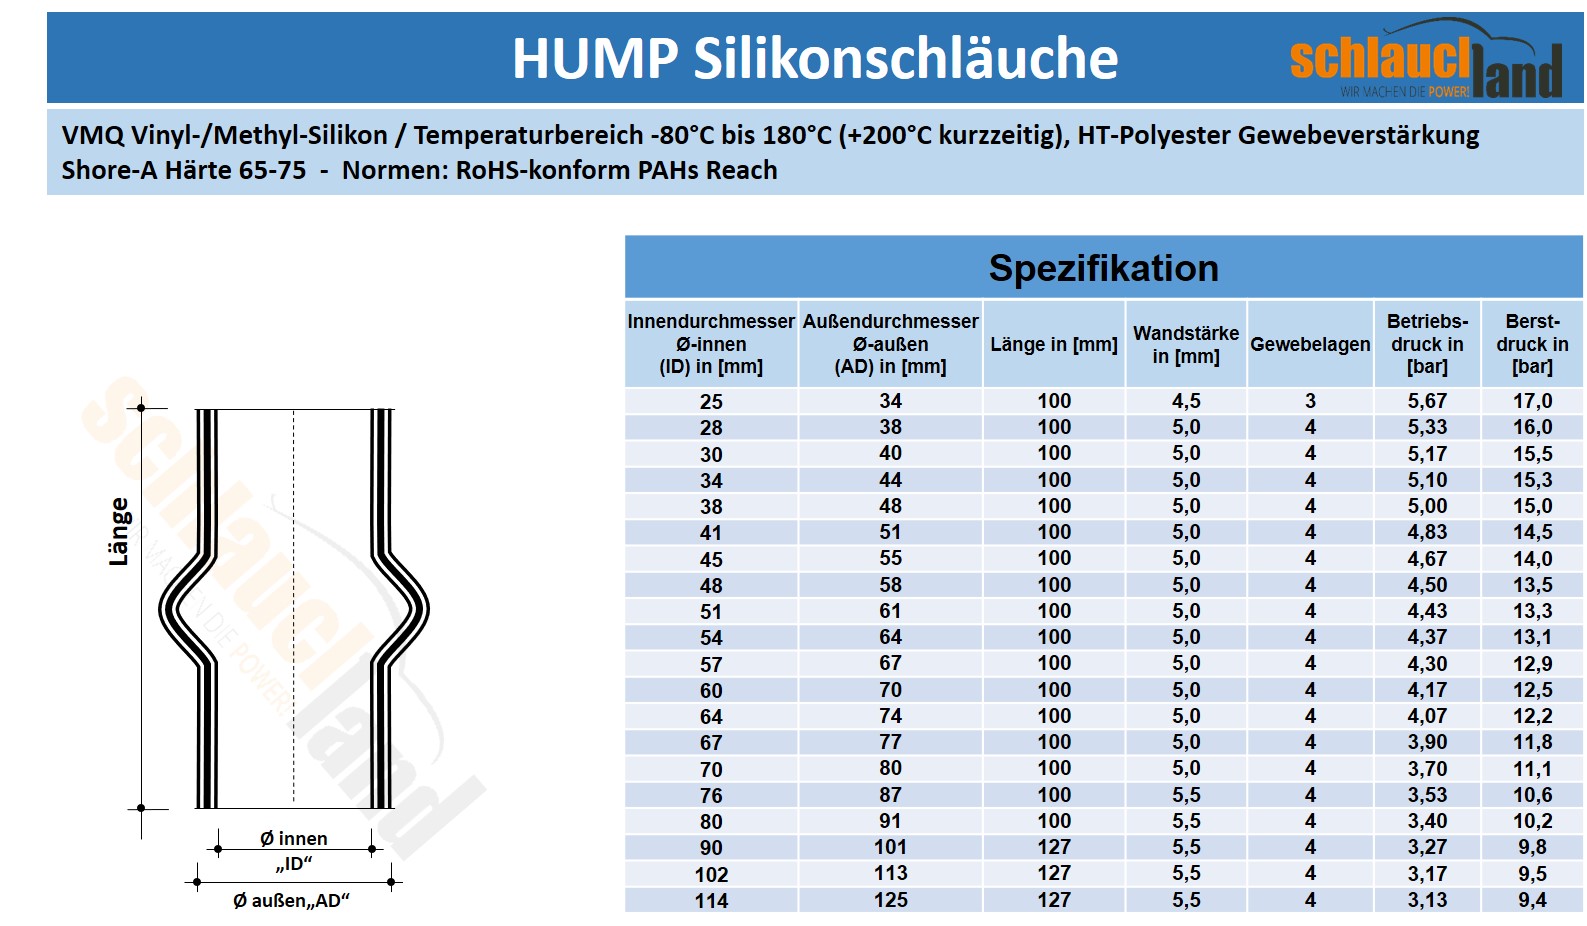 Datenblatt Silikon-Hump-Verbinder